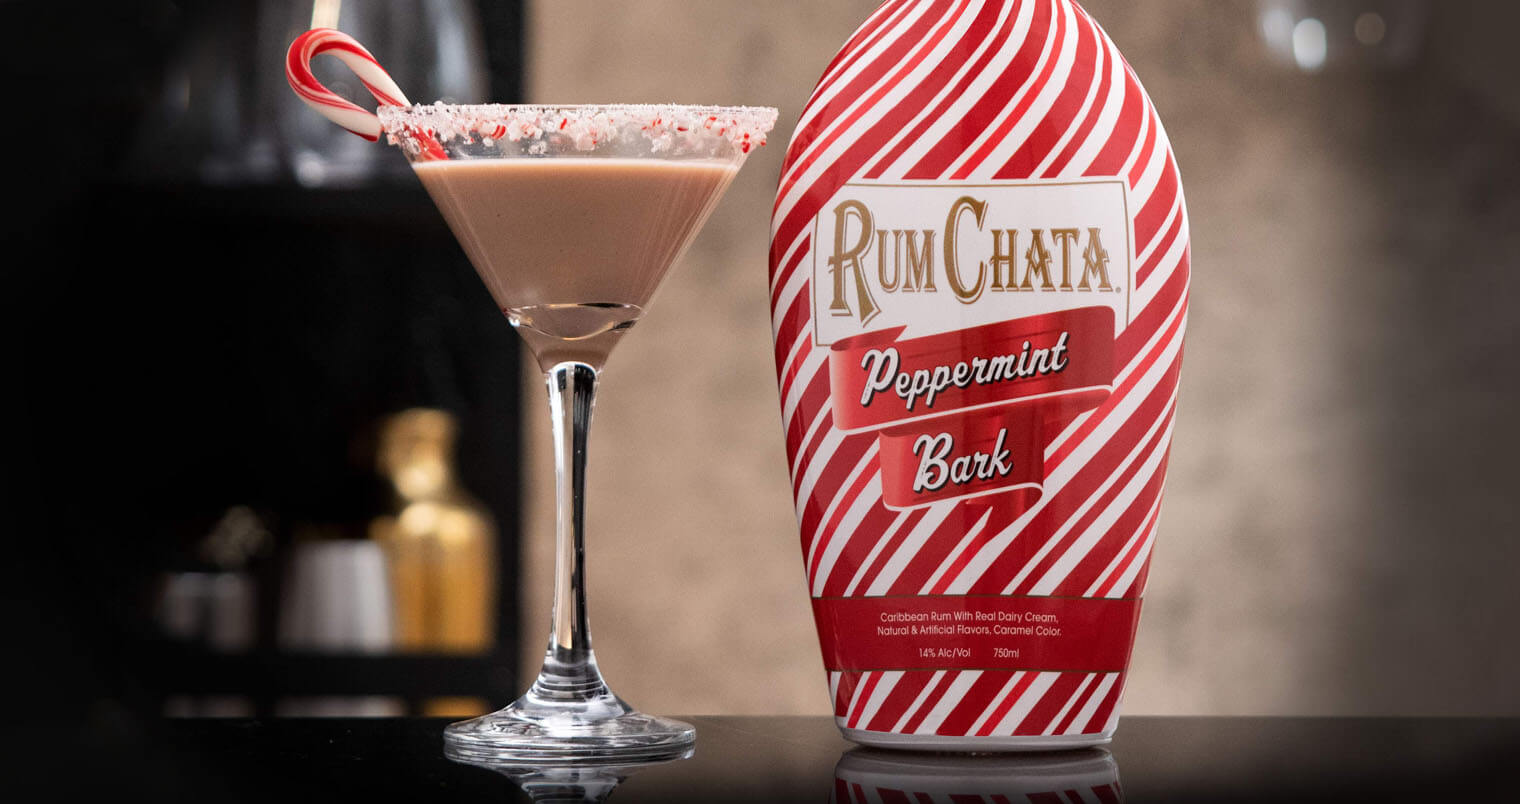 RumChata Peppermint Bark Martini W Bottle, featured image